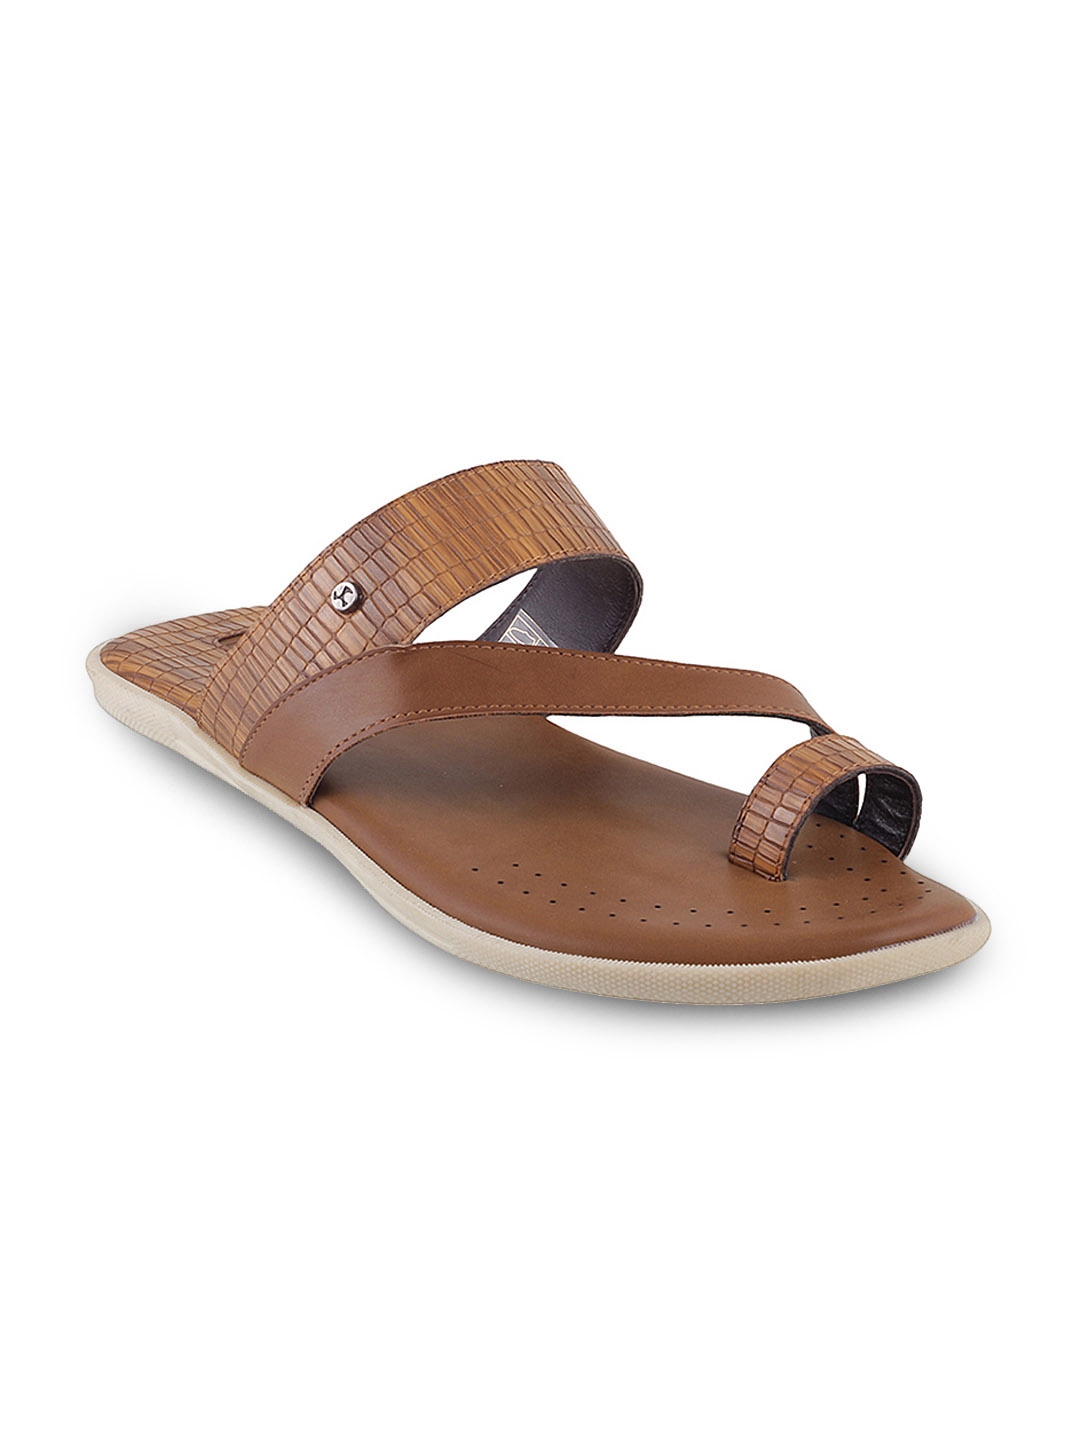 Buy Mochi Men Tan Comfort Leather Sandals - Sandals for Men 7135116 | Myntra